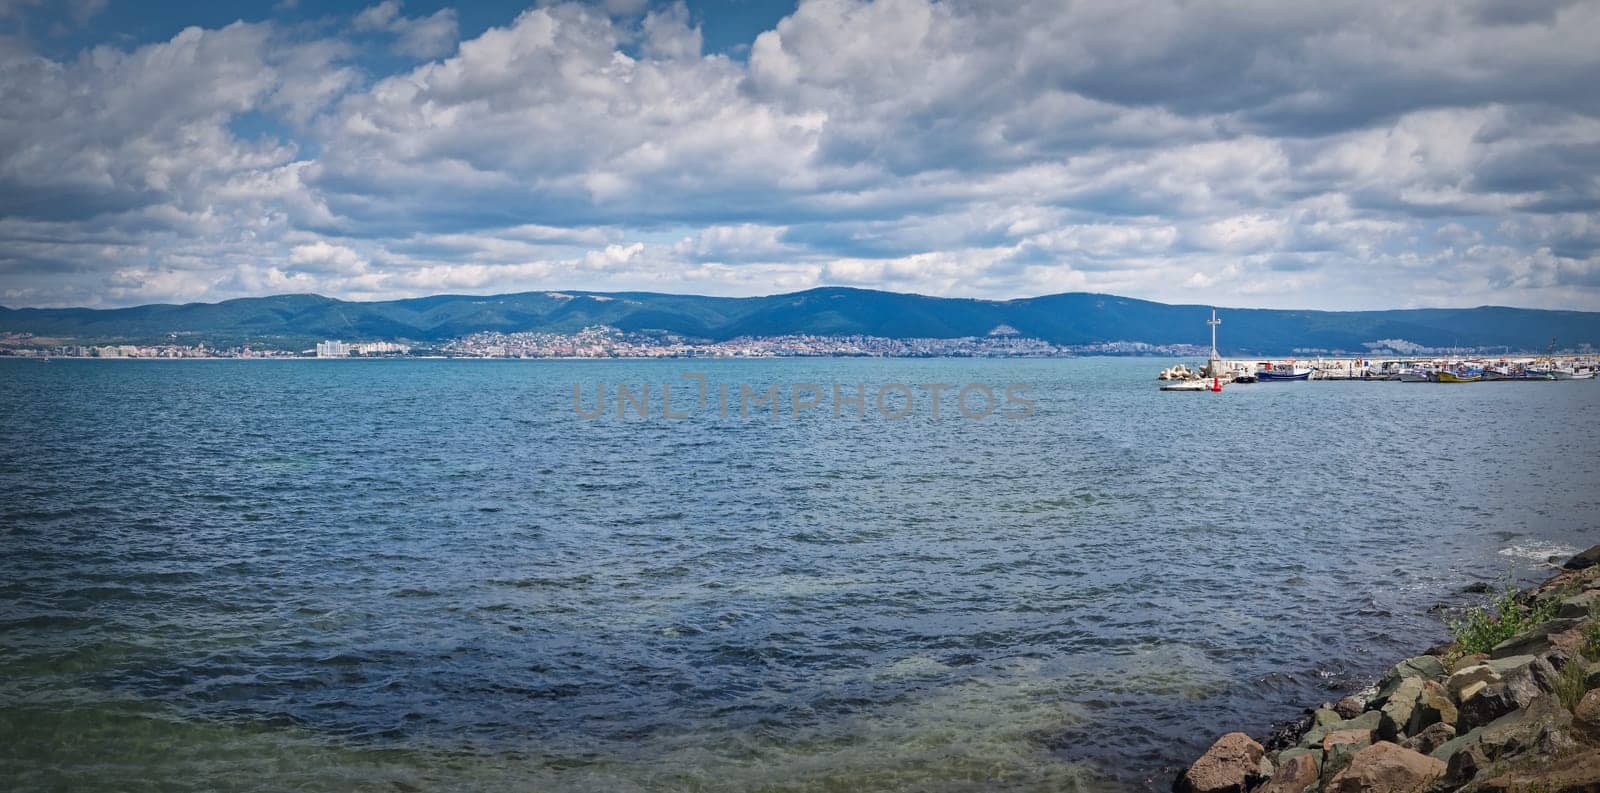 Bulgarian Black Sea coastline resorts with view from the Nessebar island  by psychoshadow